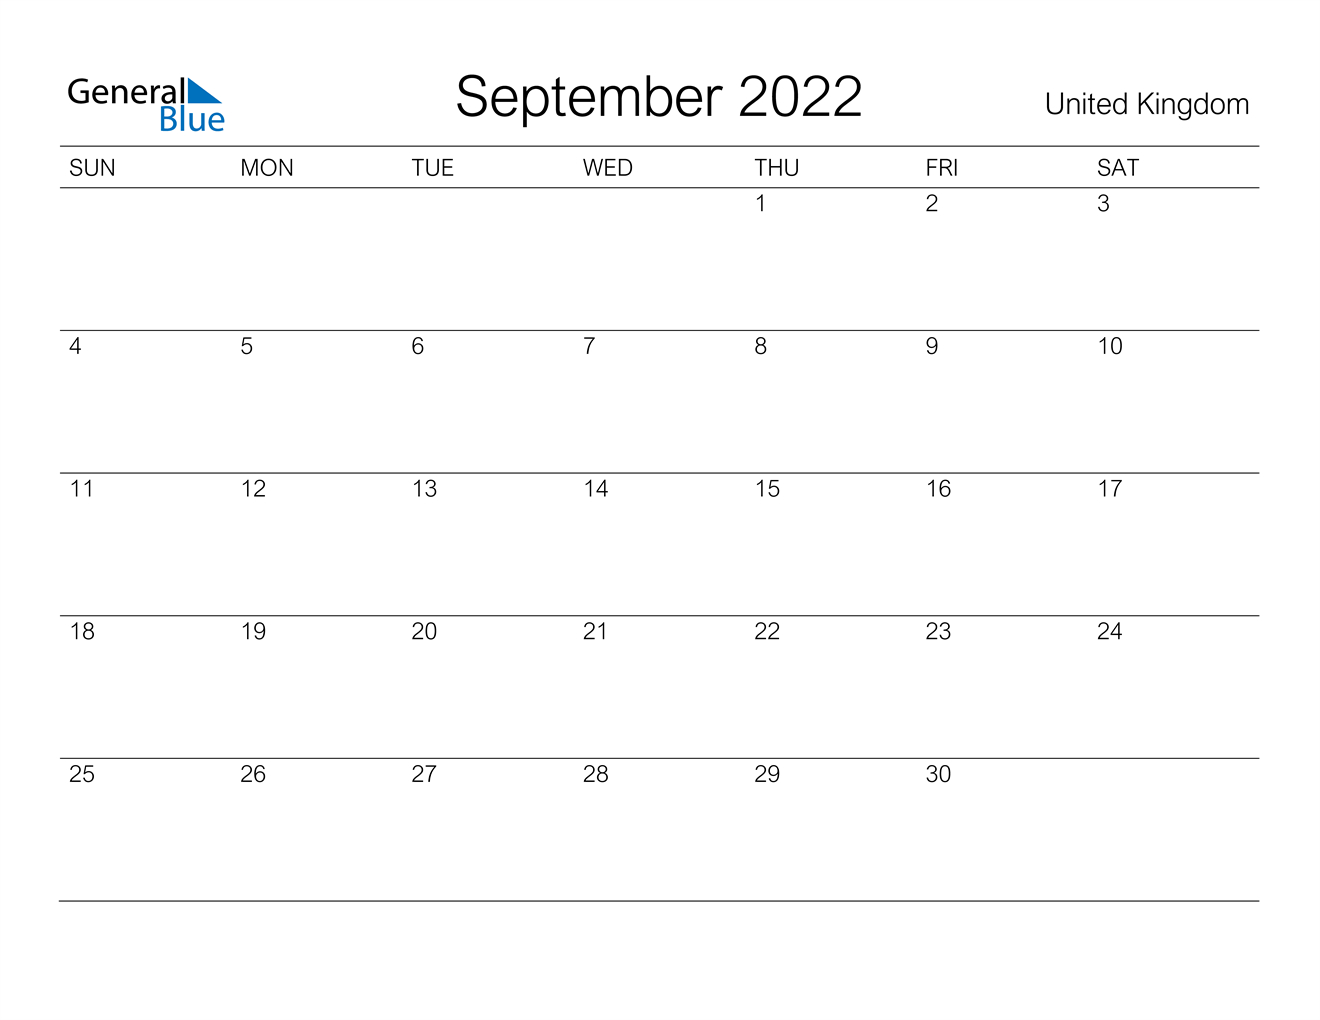 September 2022 Calendar - United Kingdom